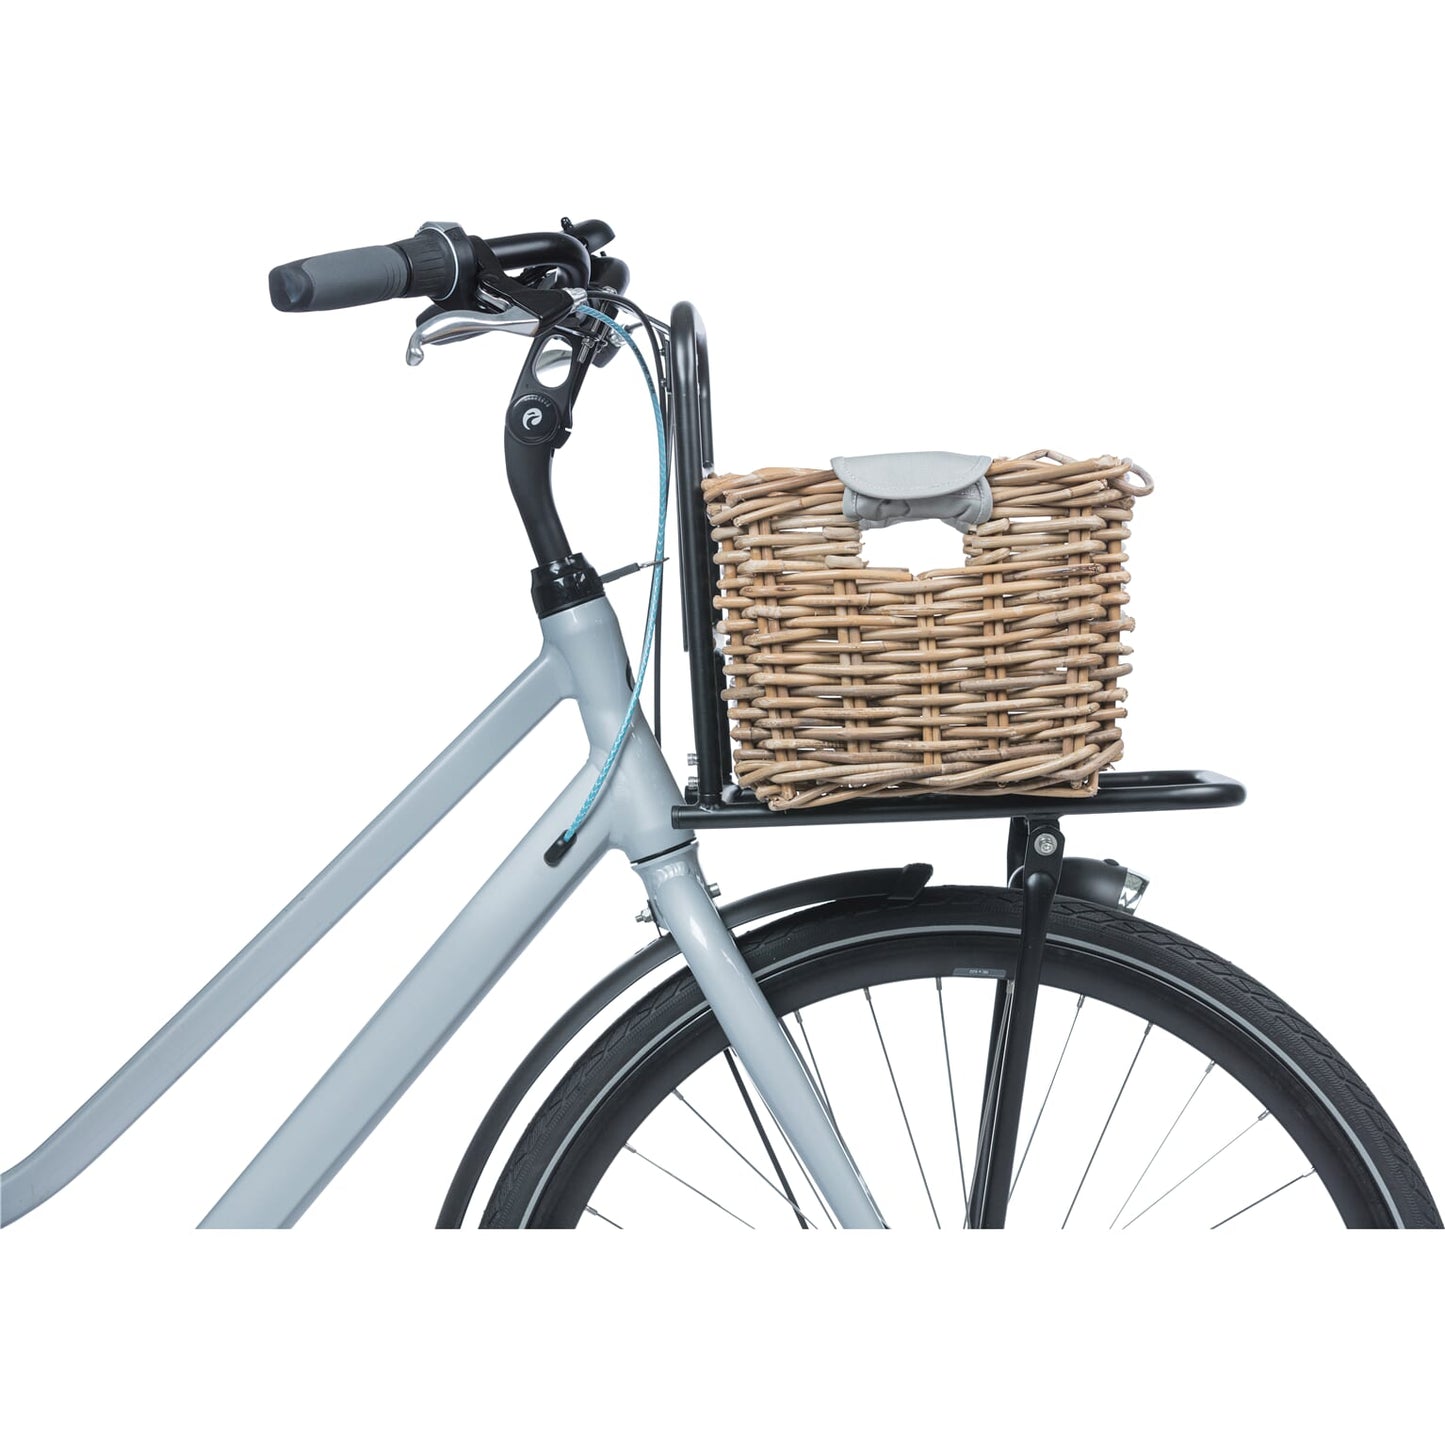 Basil Dorset - Canasta de bicicletas - Medium - Gris